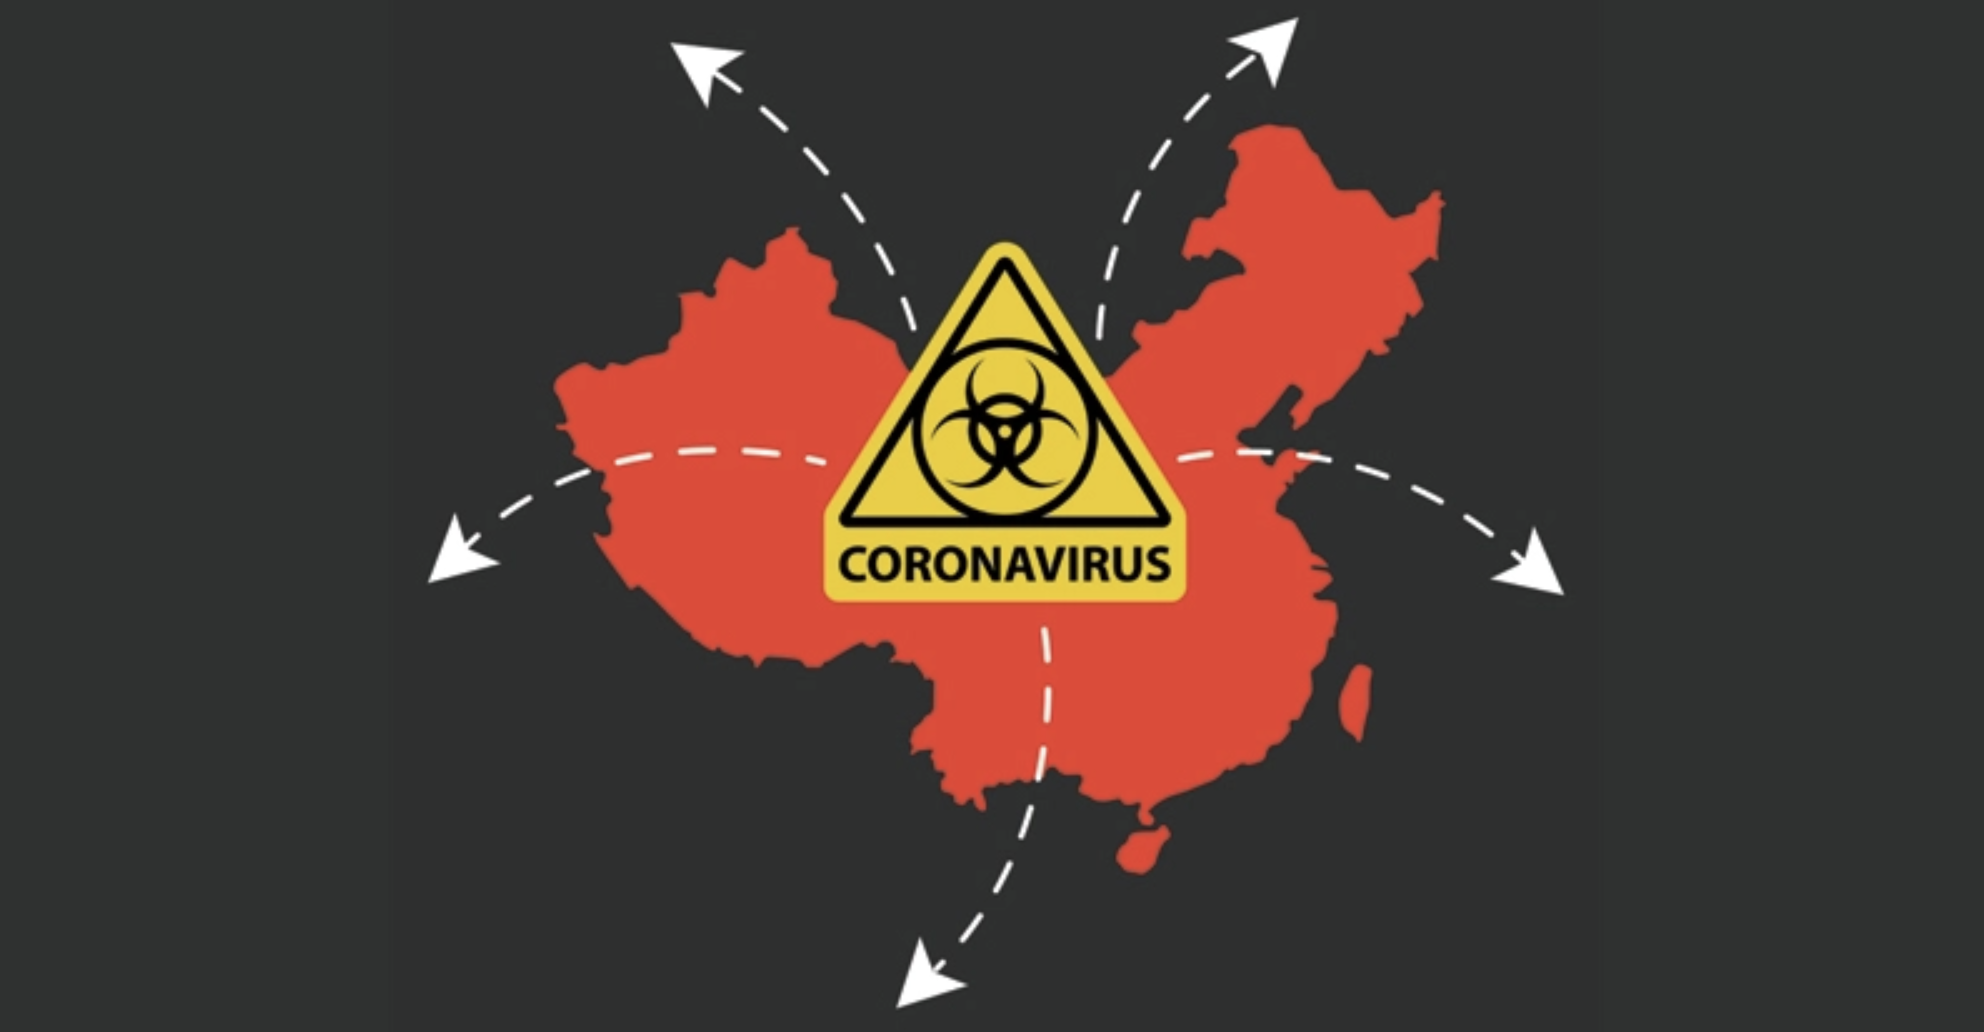 Alex Jones Infowars Coronavirus 1 28 2020